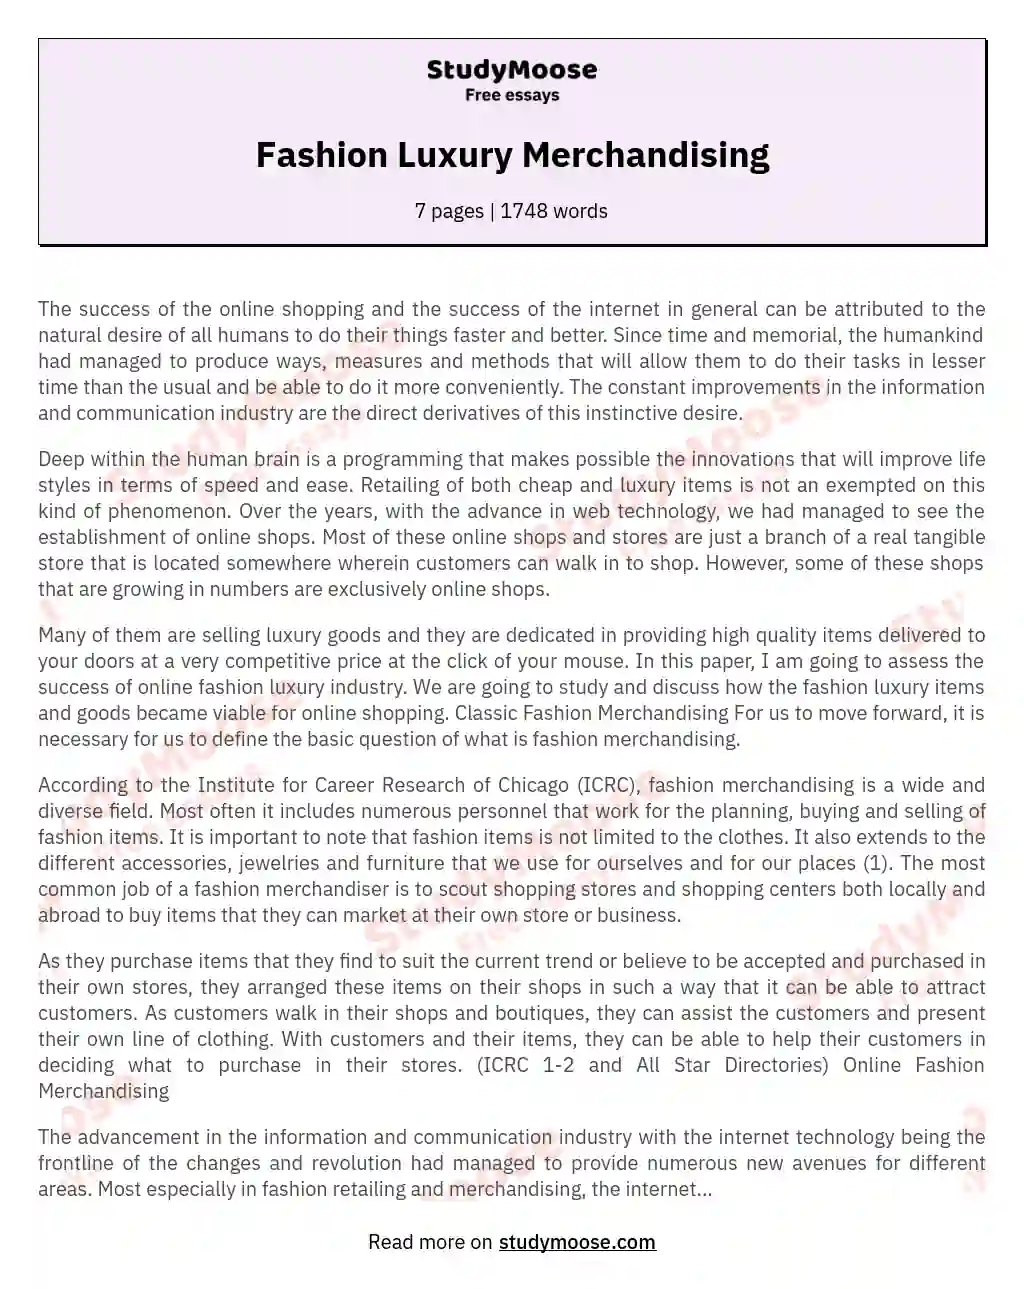 Fashion Luxury Merchandising essay